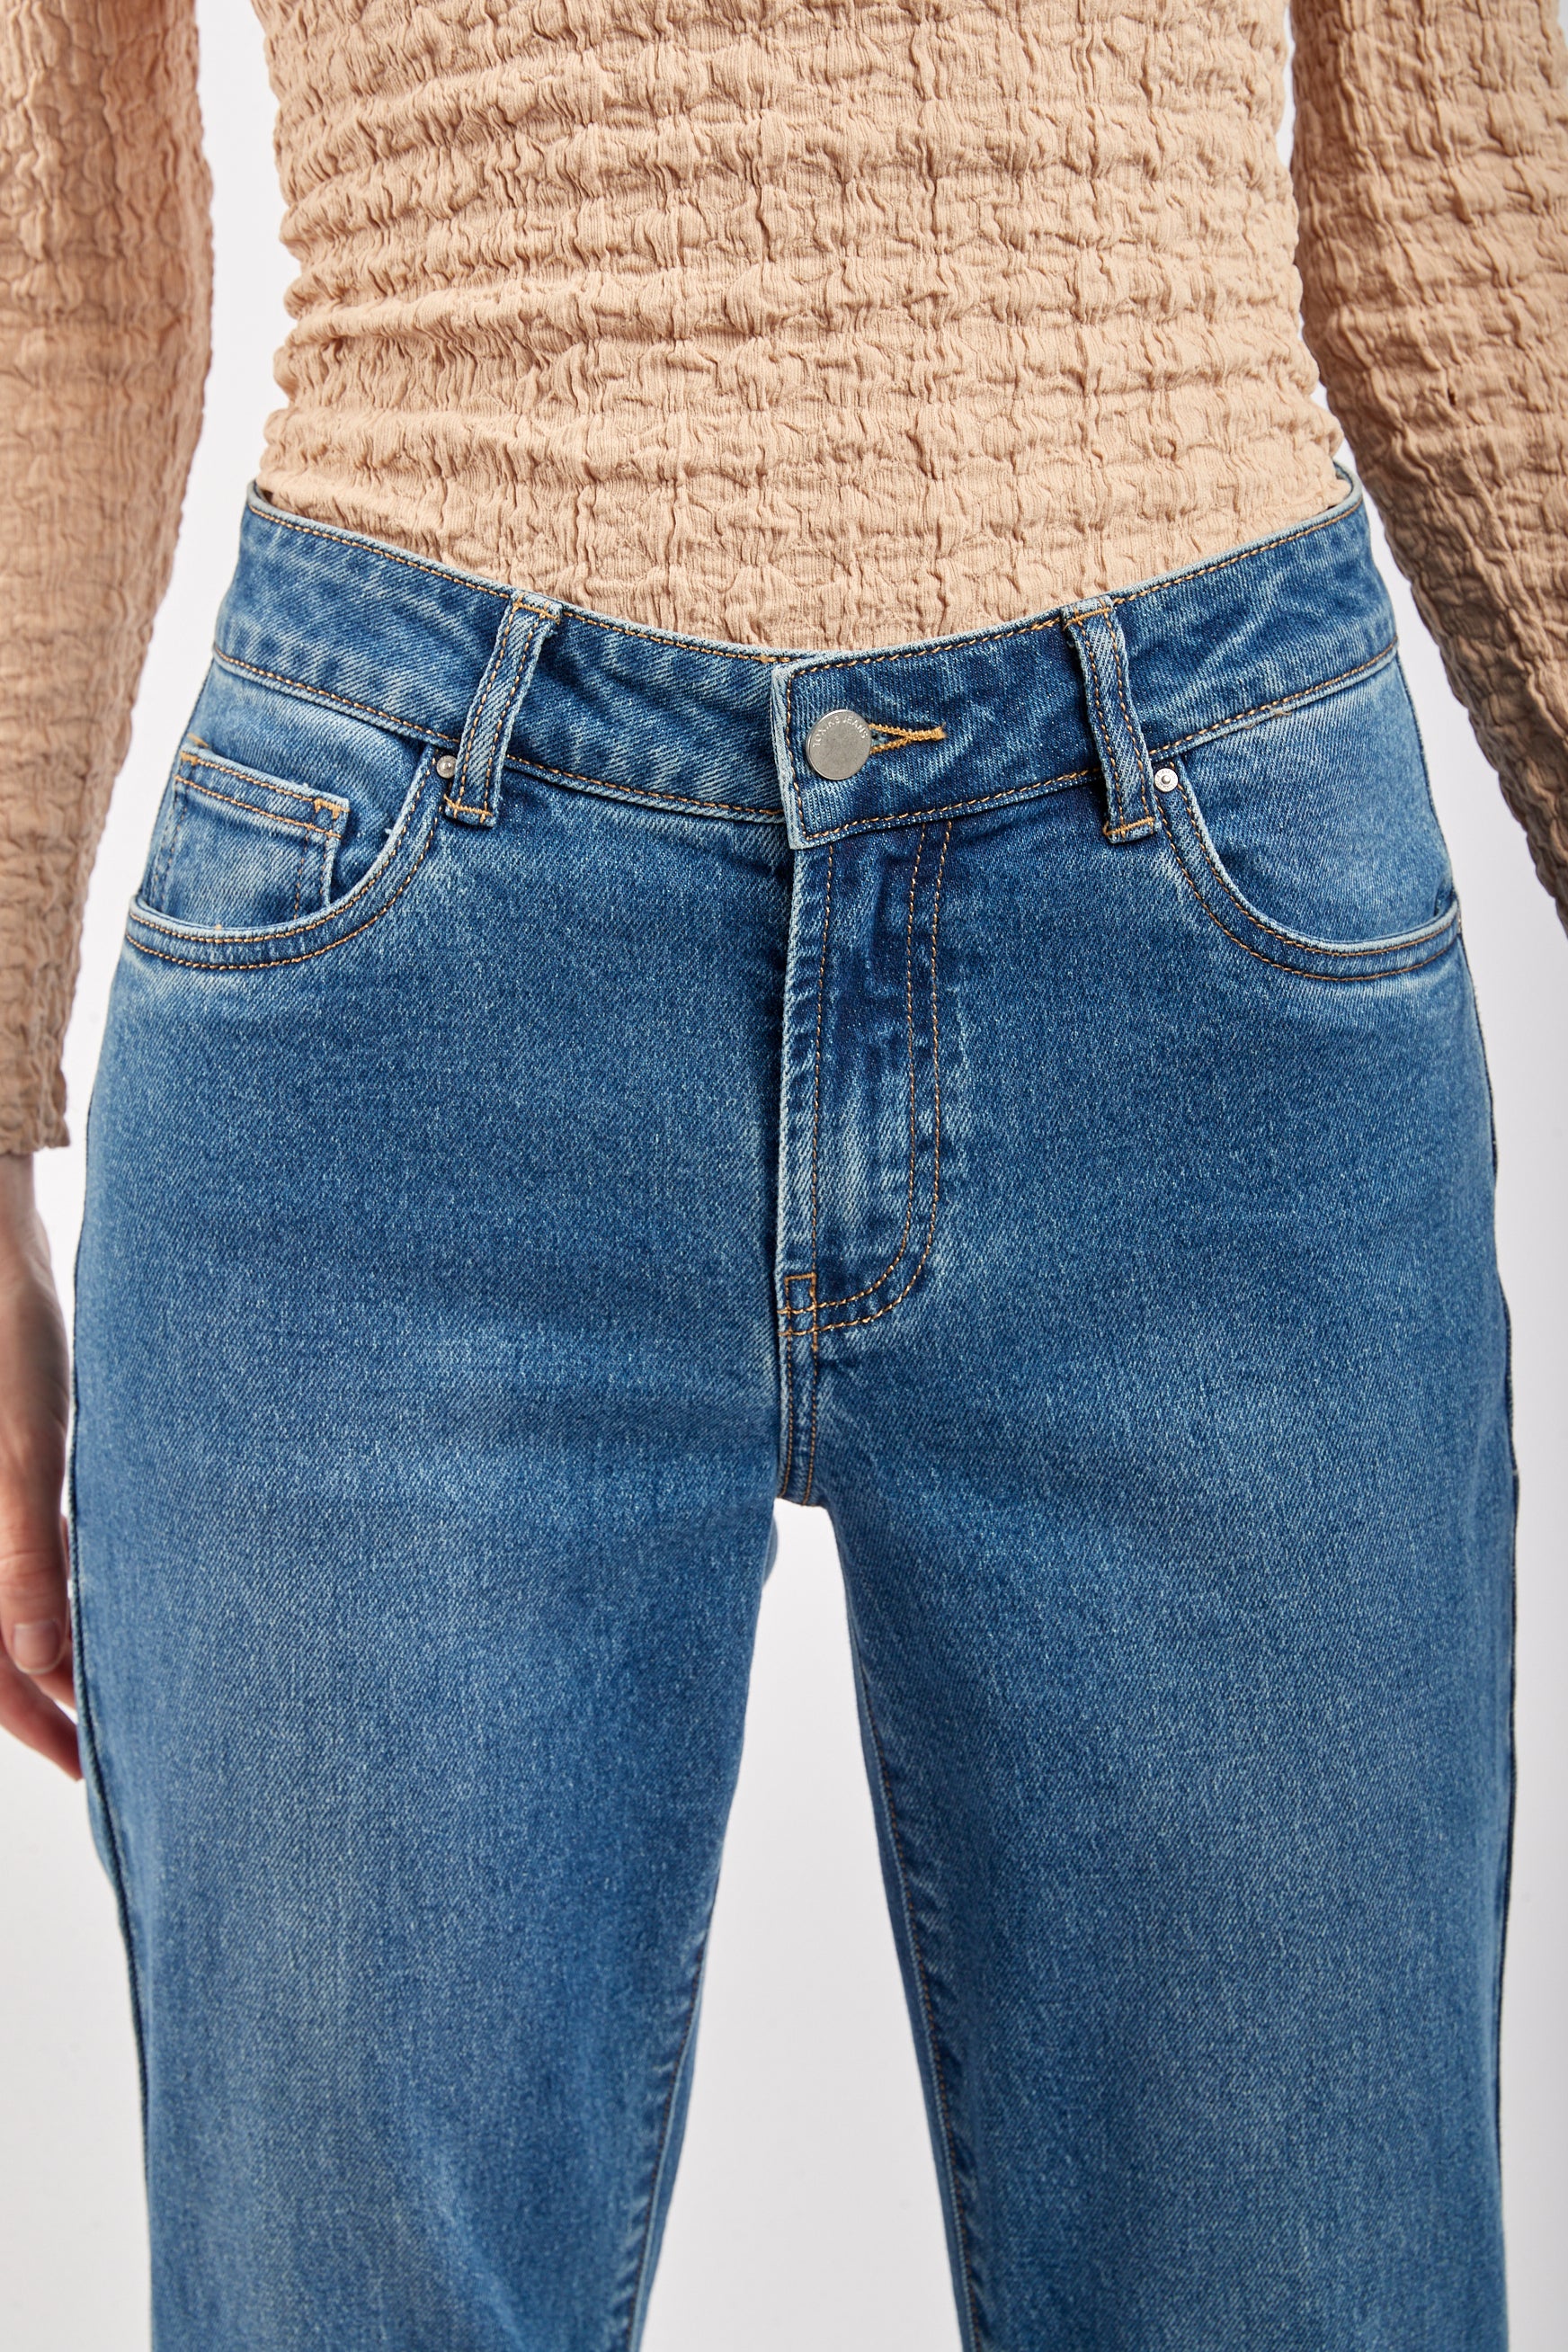 Jeans Detalle Pocket de rodilla - Broma